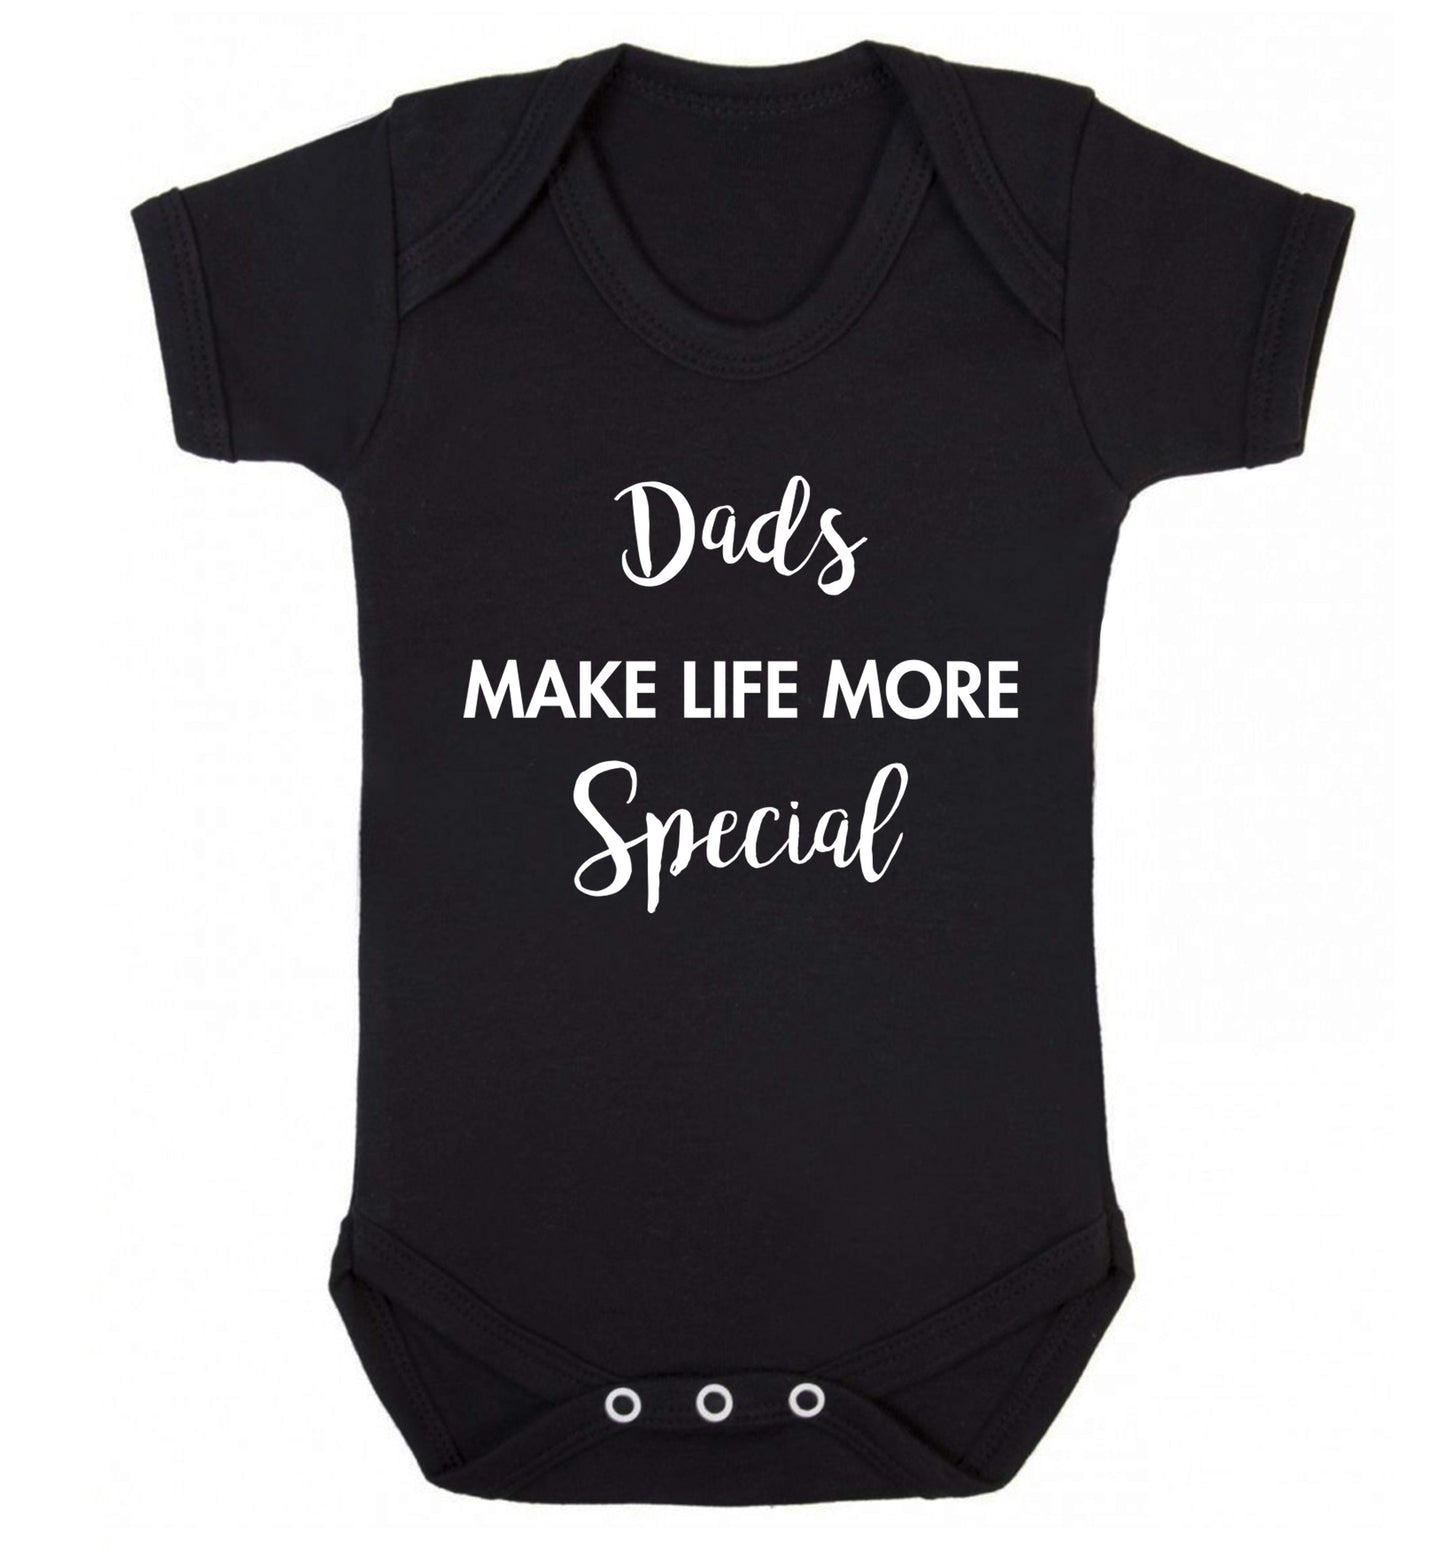 Dads make life more special Baby Vest black 18-24 months